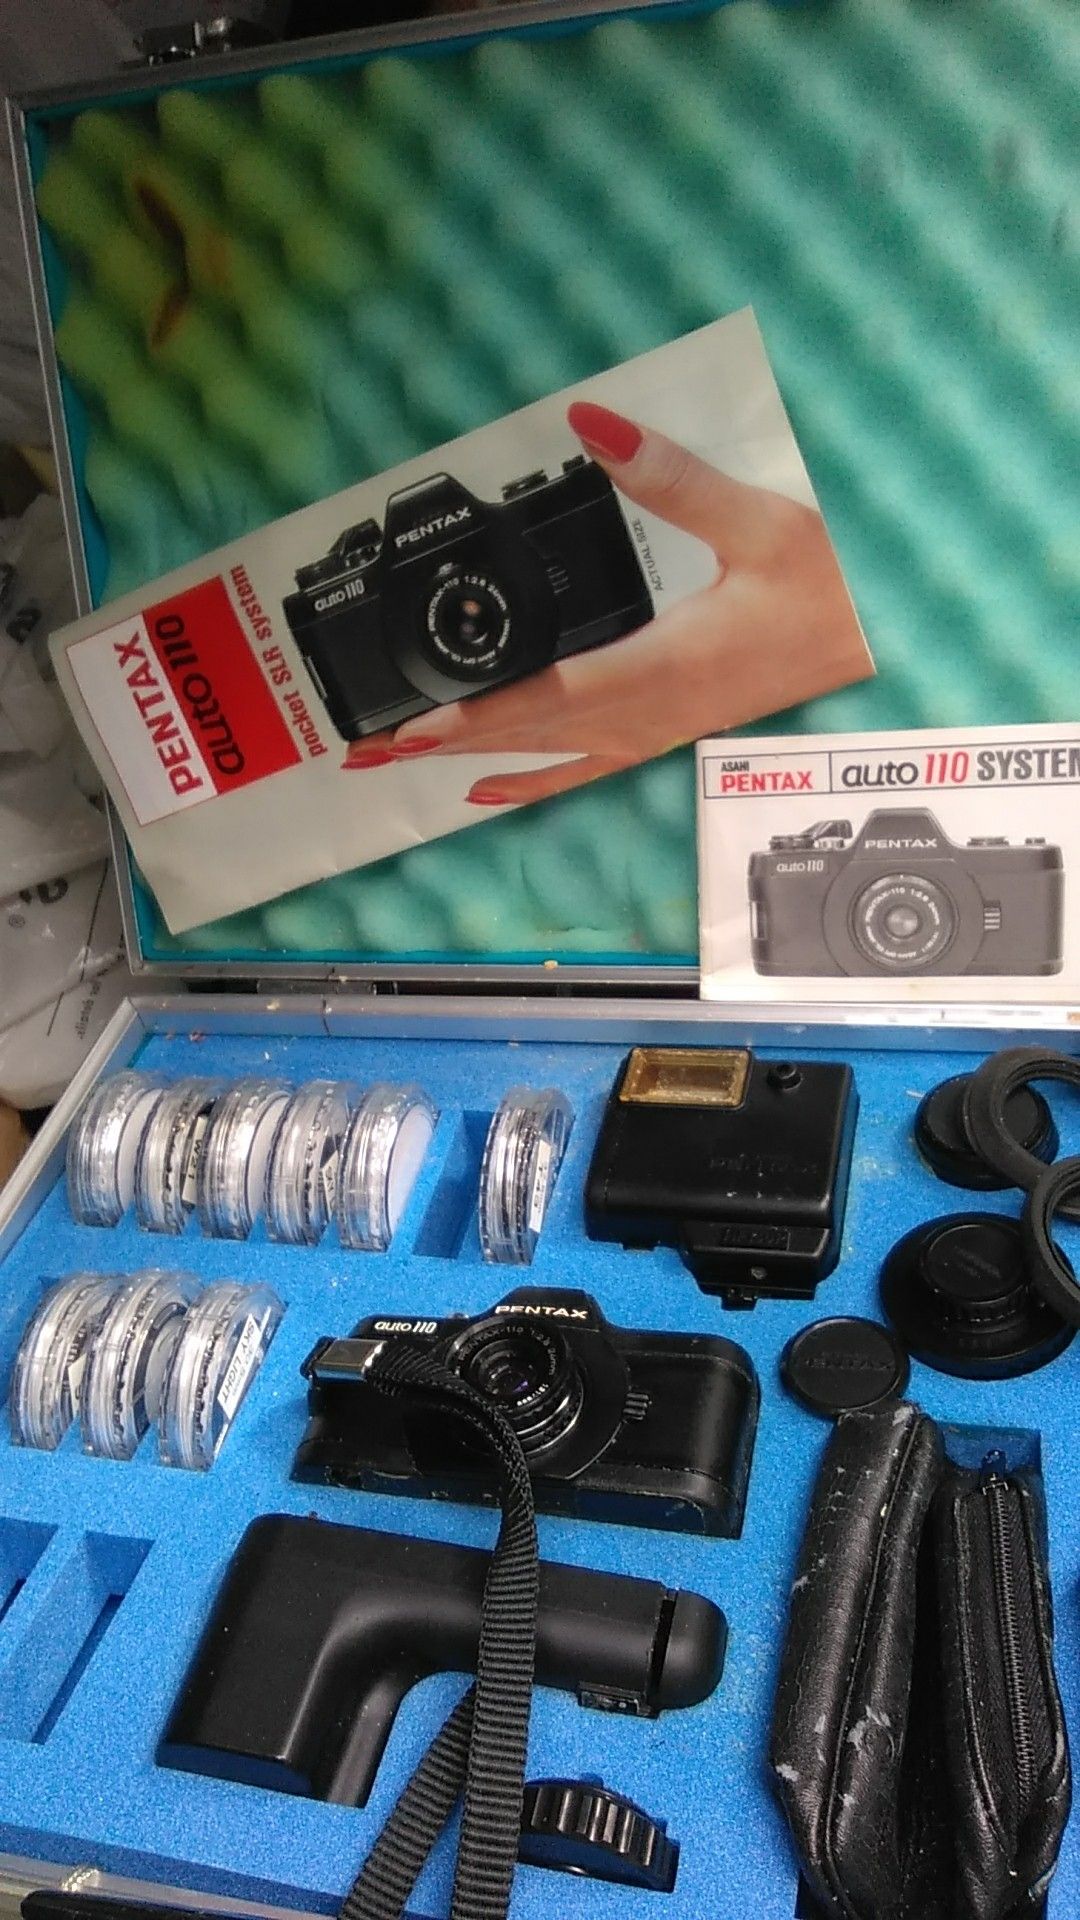 Pentax auto 110 camera kit